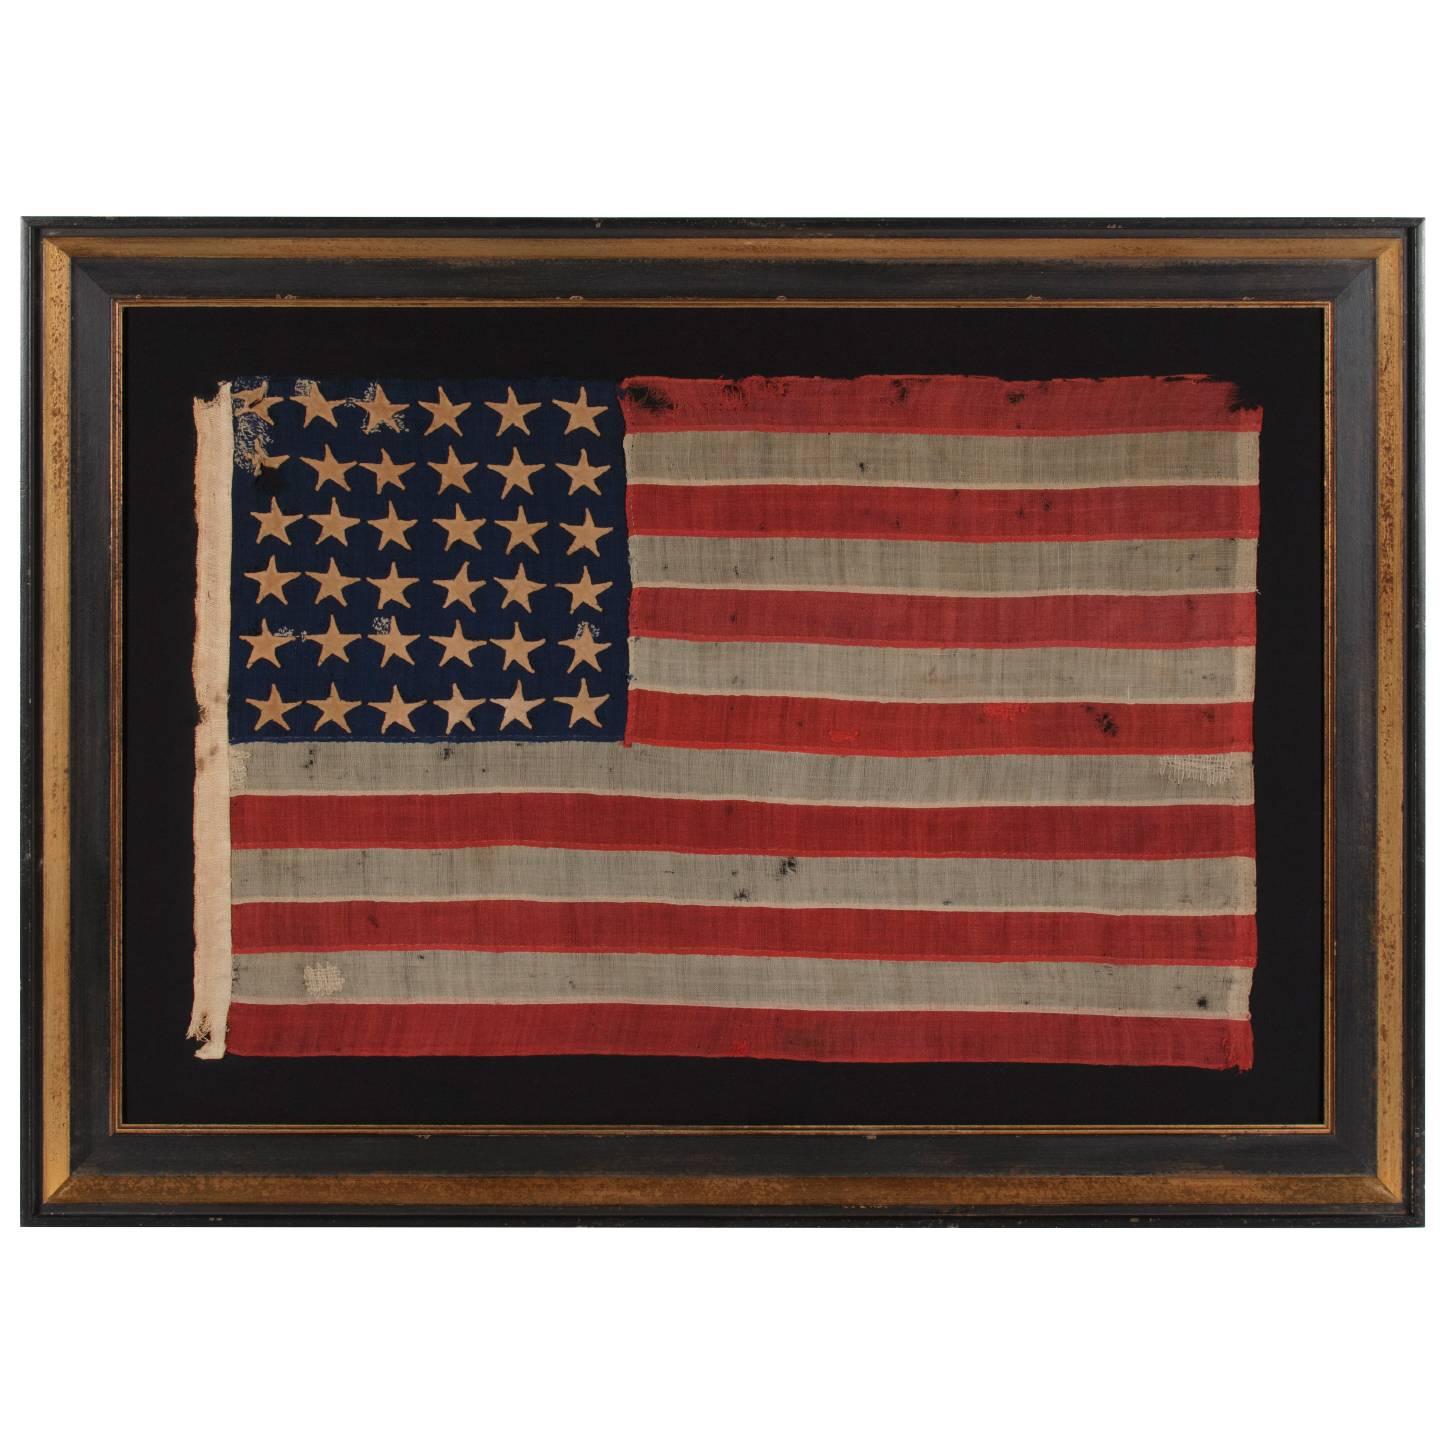 36-Star Hand-Sewn, Civil War Era Flag, Made by Annin in New York City